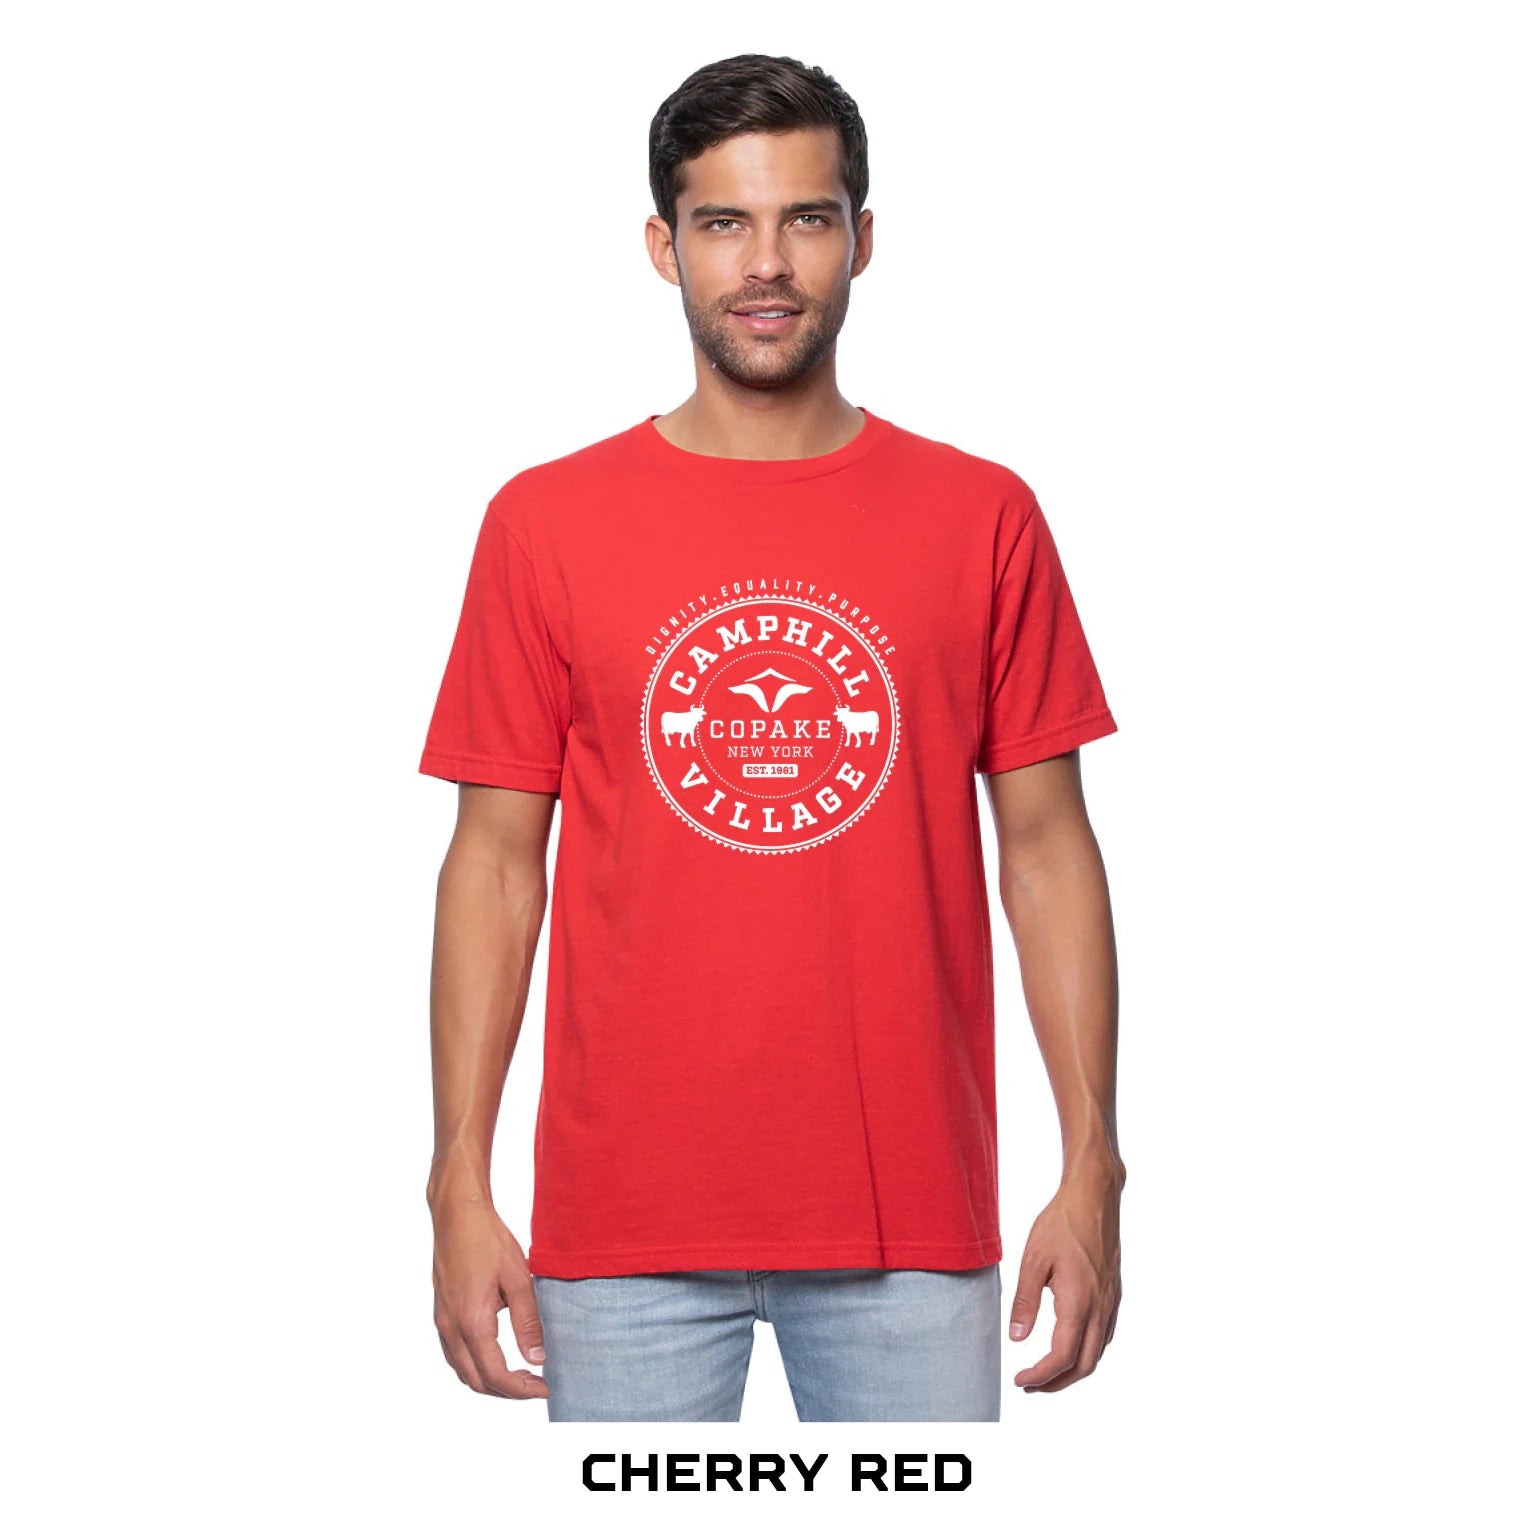 T-shirt - Cherry Red Design: CV Round Emblem | Camphill Village Store |  Camphill Village Store